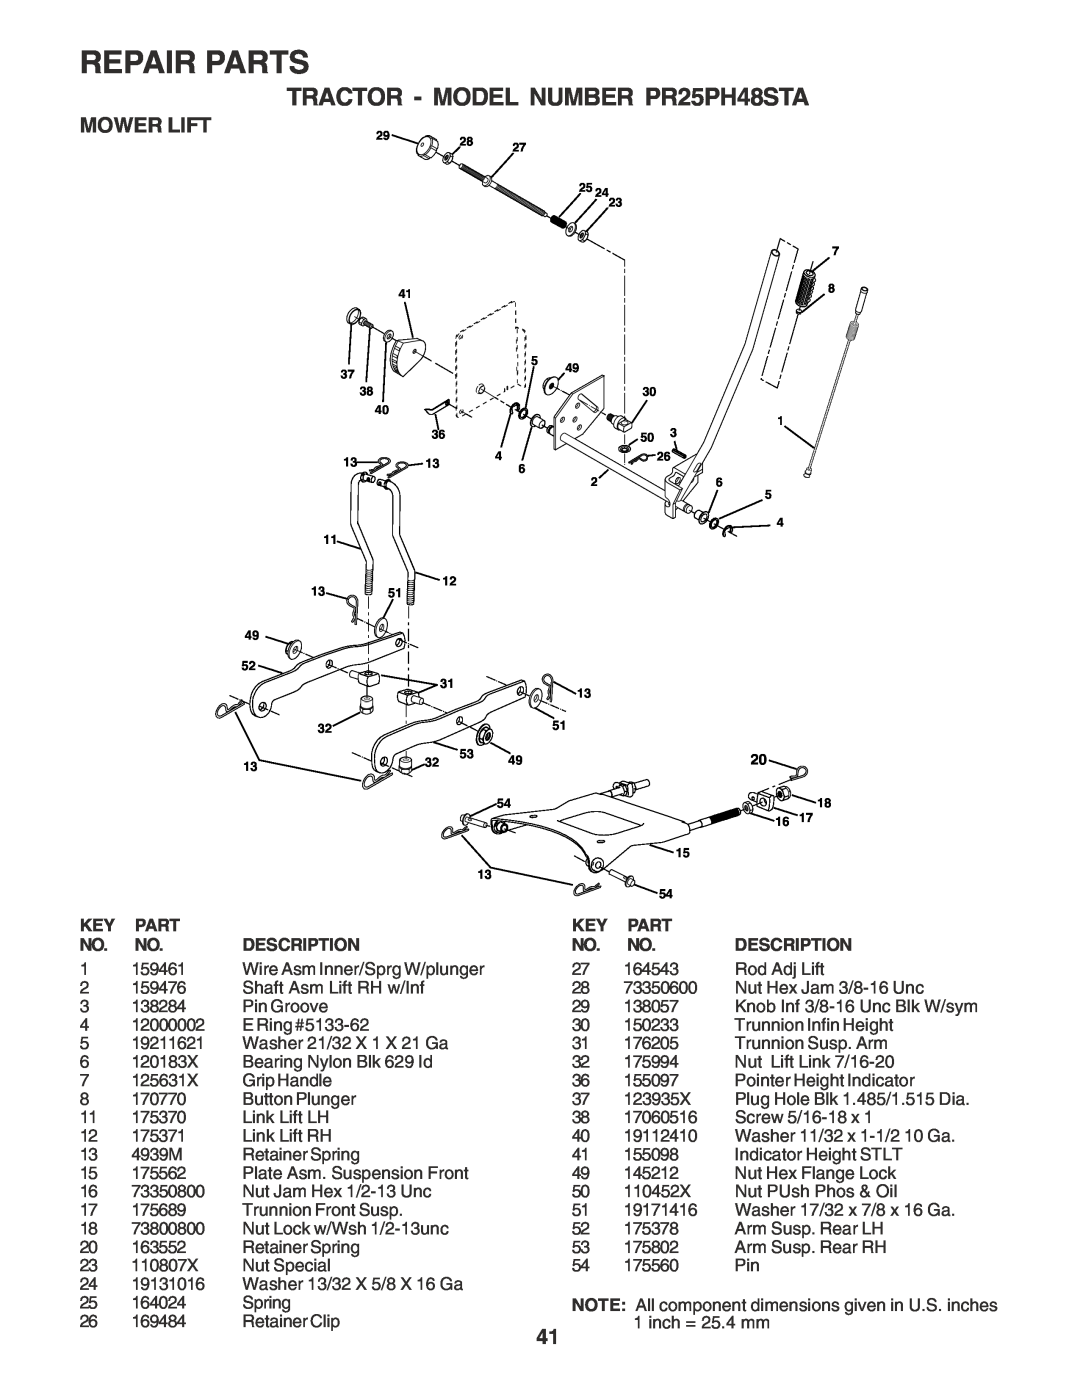 Poulan 180278 owner manual Mower Lift, Repair Parts, TRACTOR - MODEL NUMBER PR25PH48STA, Description 